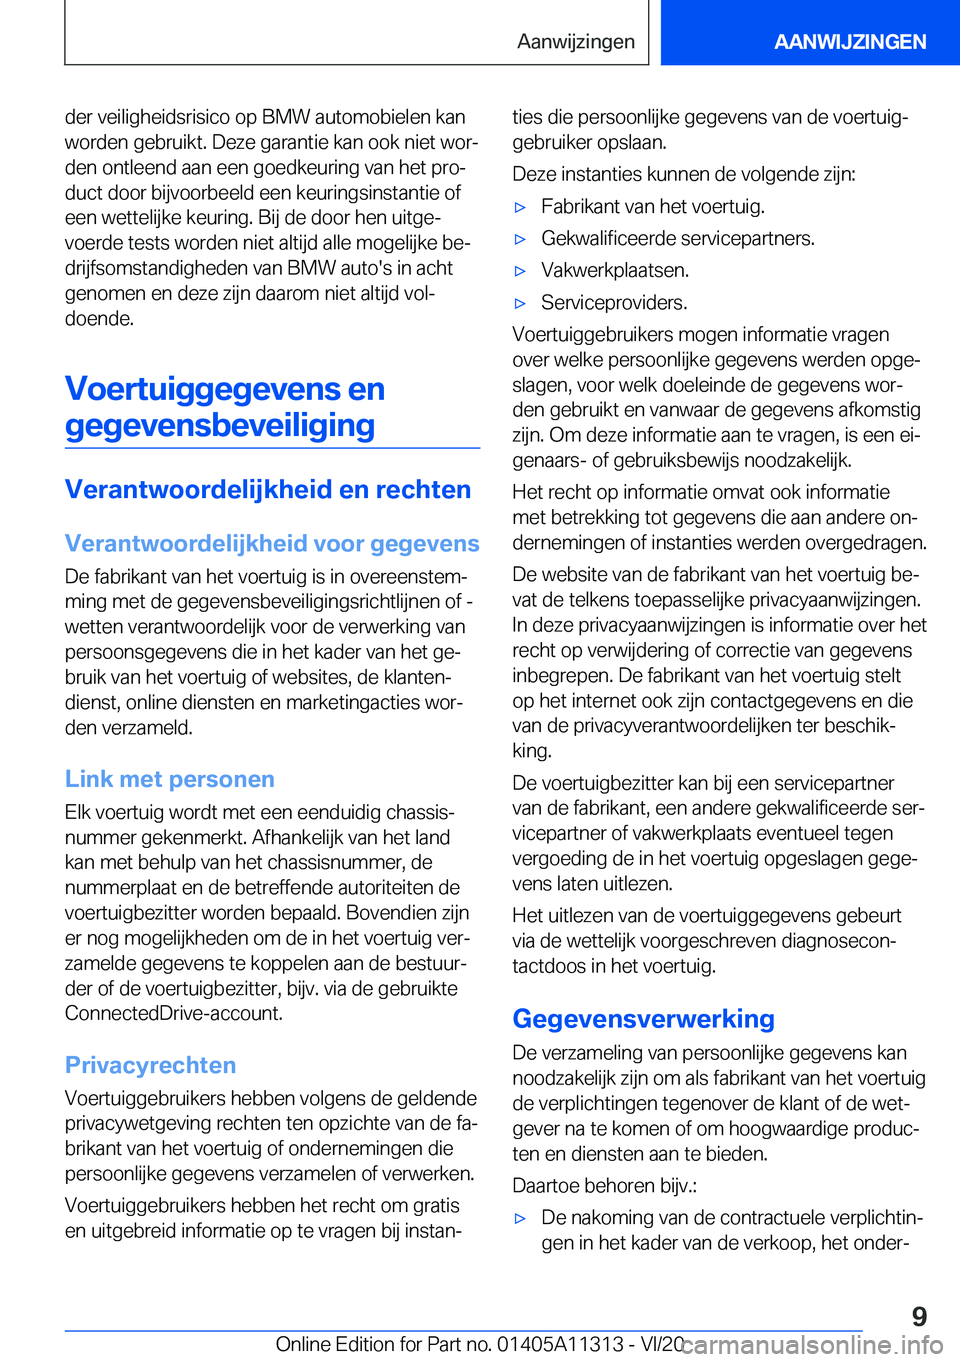 BMW 5 SERIES 2021  Instructieboekjes (in Dutch) �d�e�r��v�e�i�l�i�g�h�e�i�d�s�r�i�s�i�c�o��o�p��B�M�W��a�u�t�o�m�o�b�i�e�l�e�n��k�a�n
�w�o�r�d�e�n��g�e�b�r�u�i�k�t�.��D�e�z�e��g�a�r�a�n�t�i�e��k�a�n��o�o�k��n�i�e�t��w�o�rj
�d�e�n��o�n